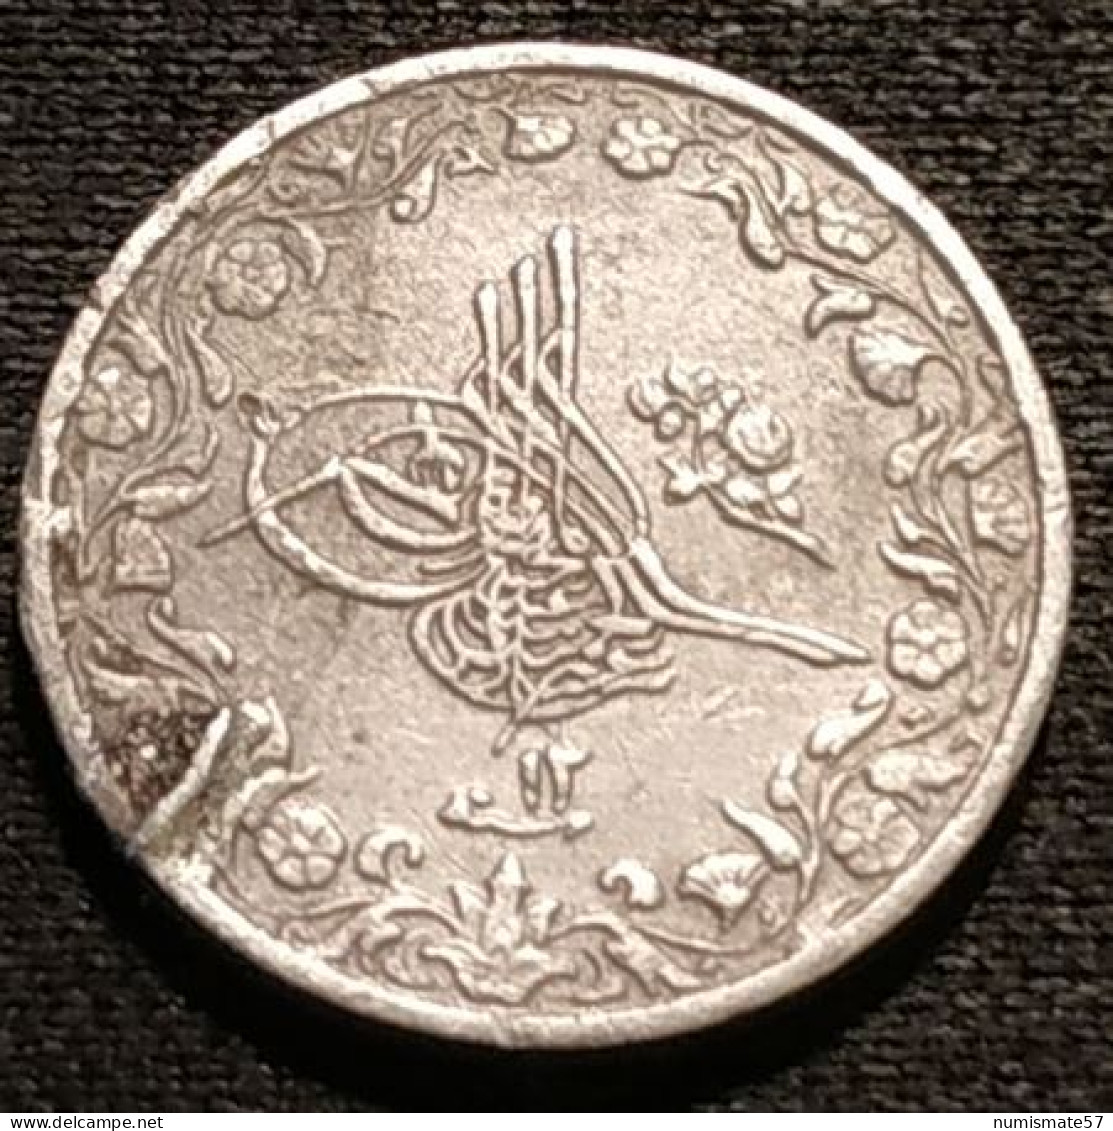 EGYPTE - EGYPT - 1/10 QIRSH 1886 ( 1293 - 12 ) - KM 289 - ( Abdul Hamid II ) - Egypt